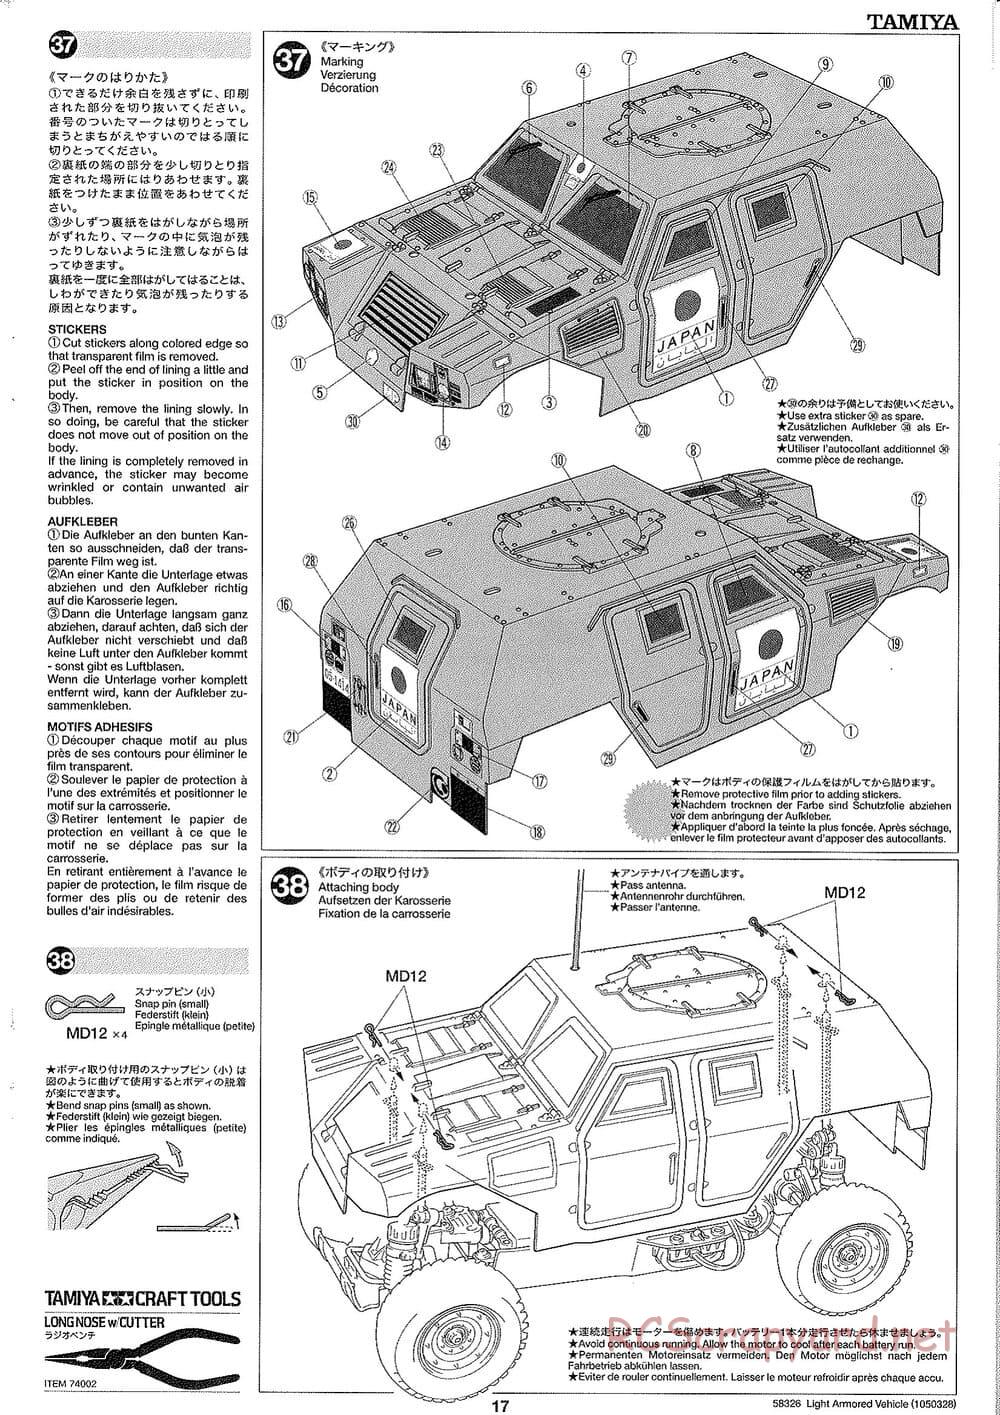 Tamiya - JGSDF Light Armored Vehicle - TA-01 Chassis - Manual - Page 17